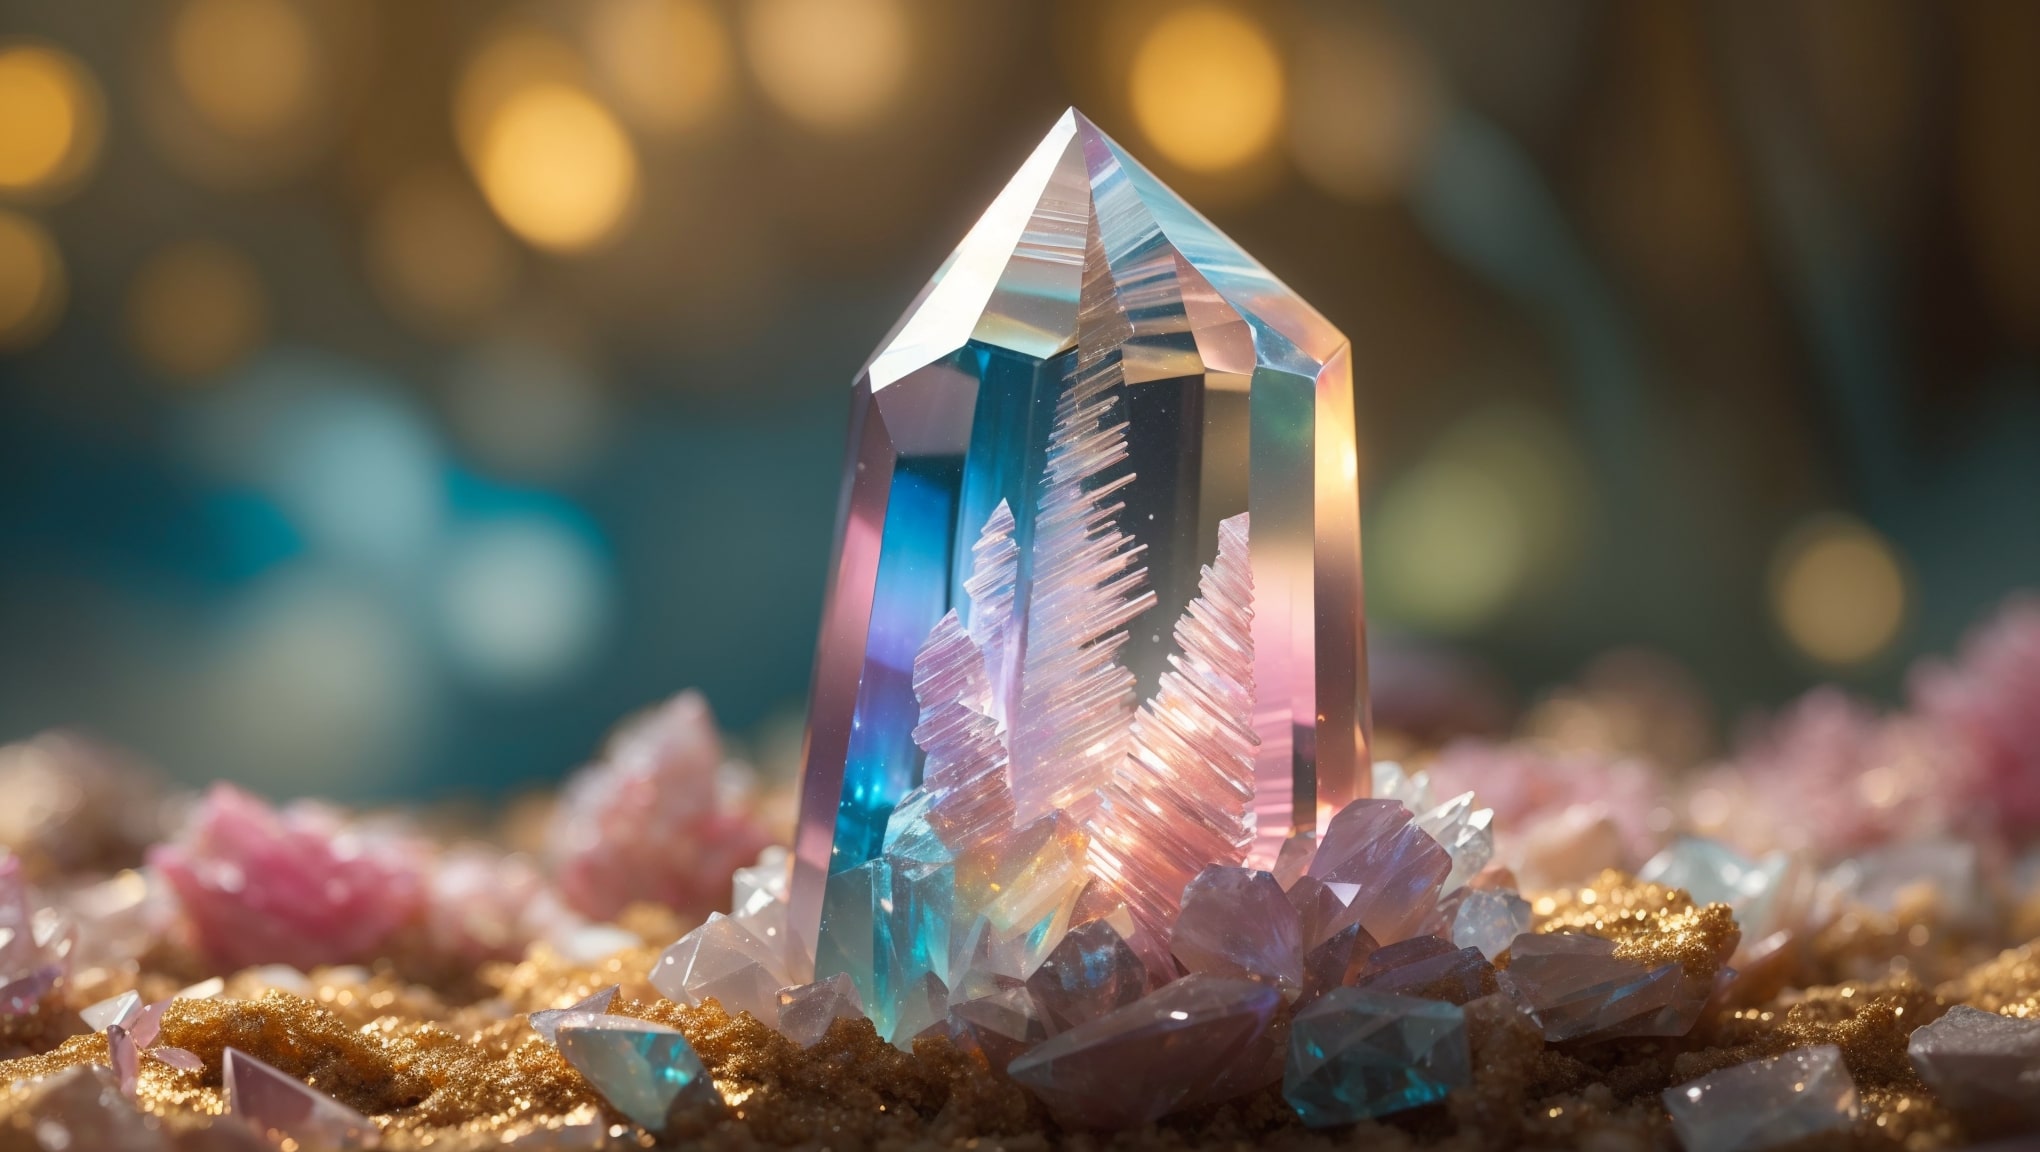 Detailed image capturing the mesmerizing aura quartz properties